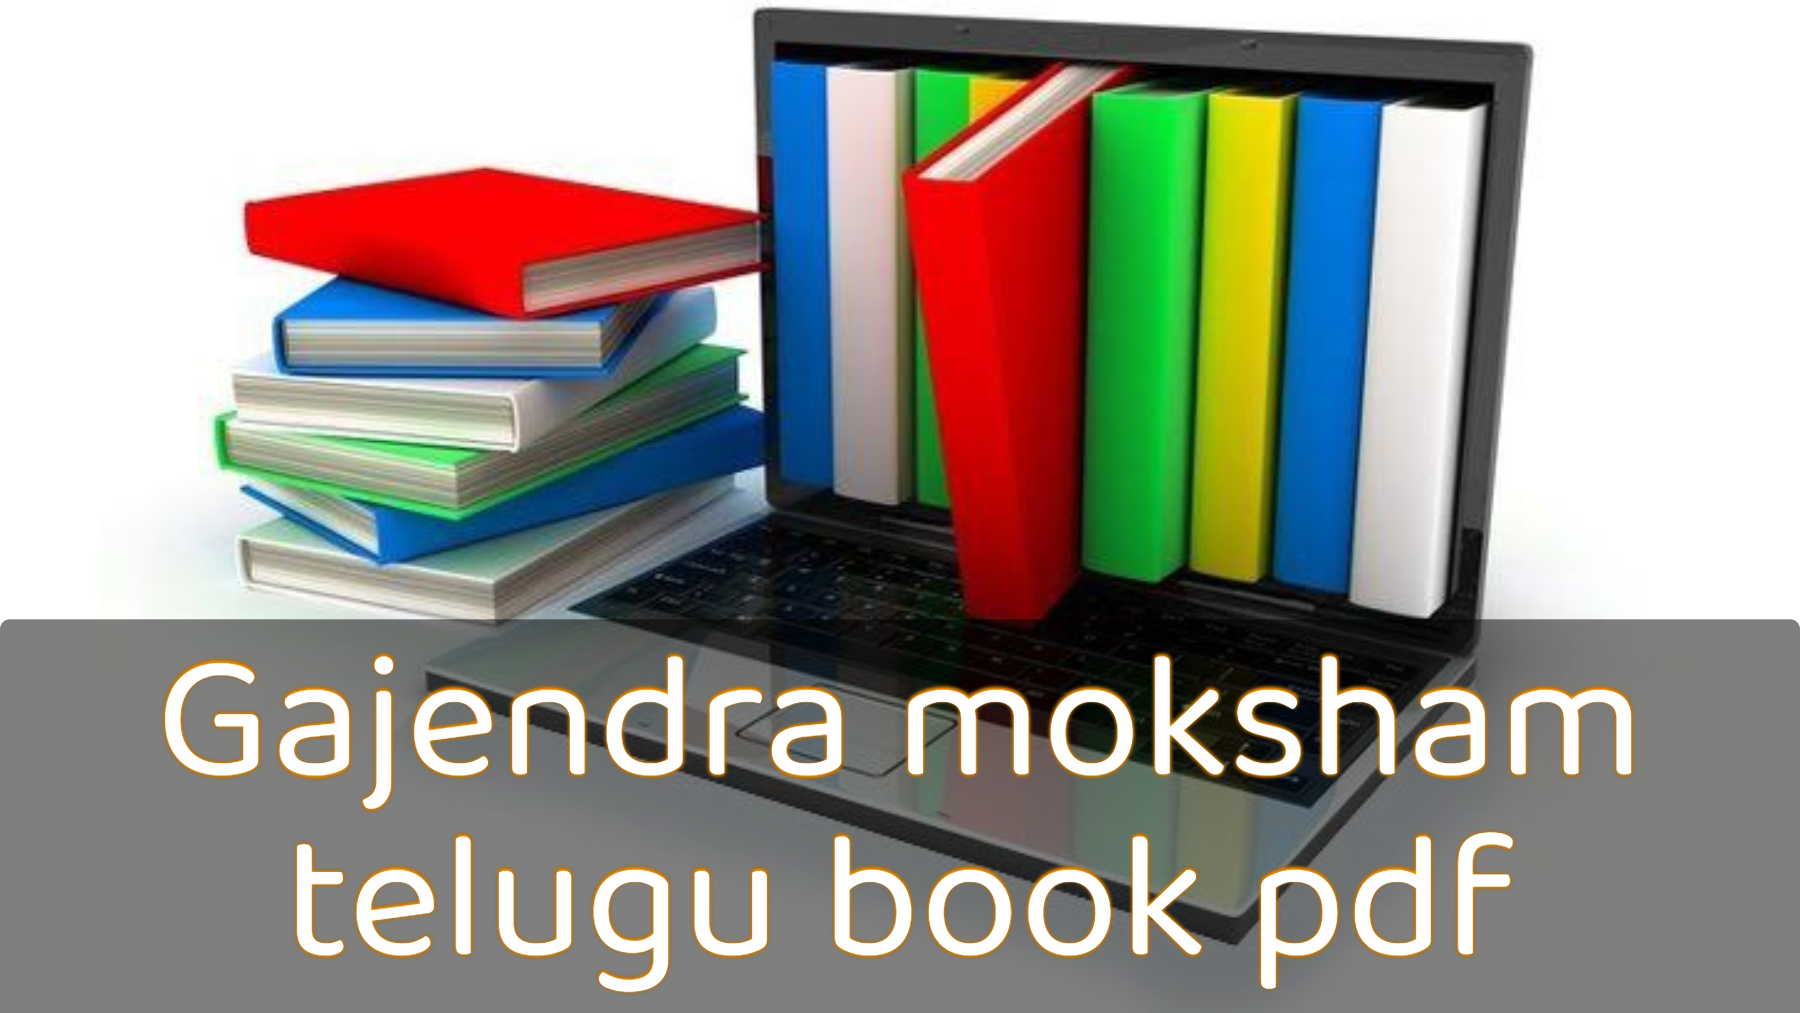 Gajendra moksham telugu book pdf, Gajendra moksham telugu book pdf download, Gajendra moksham telugu book pdf free download, Gajendra moksham telugu book